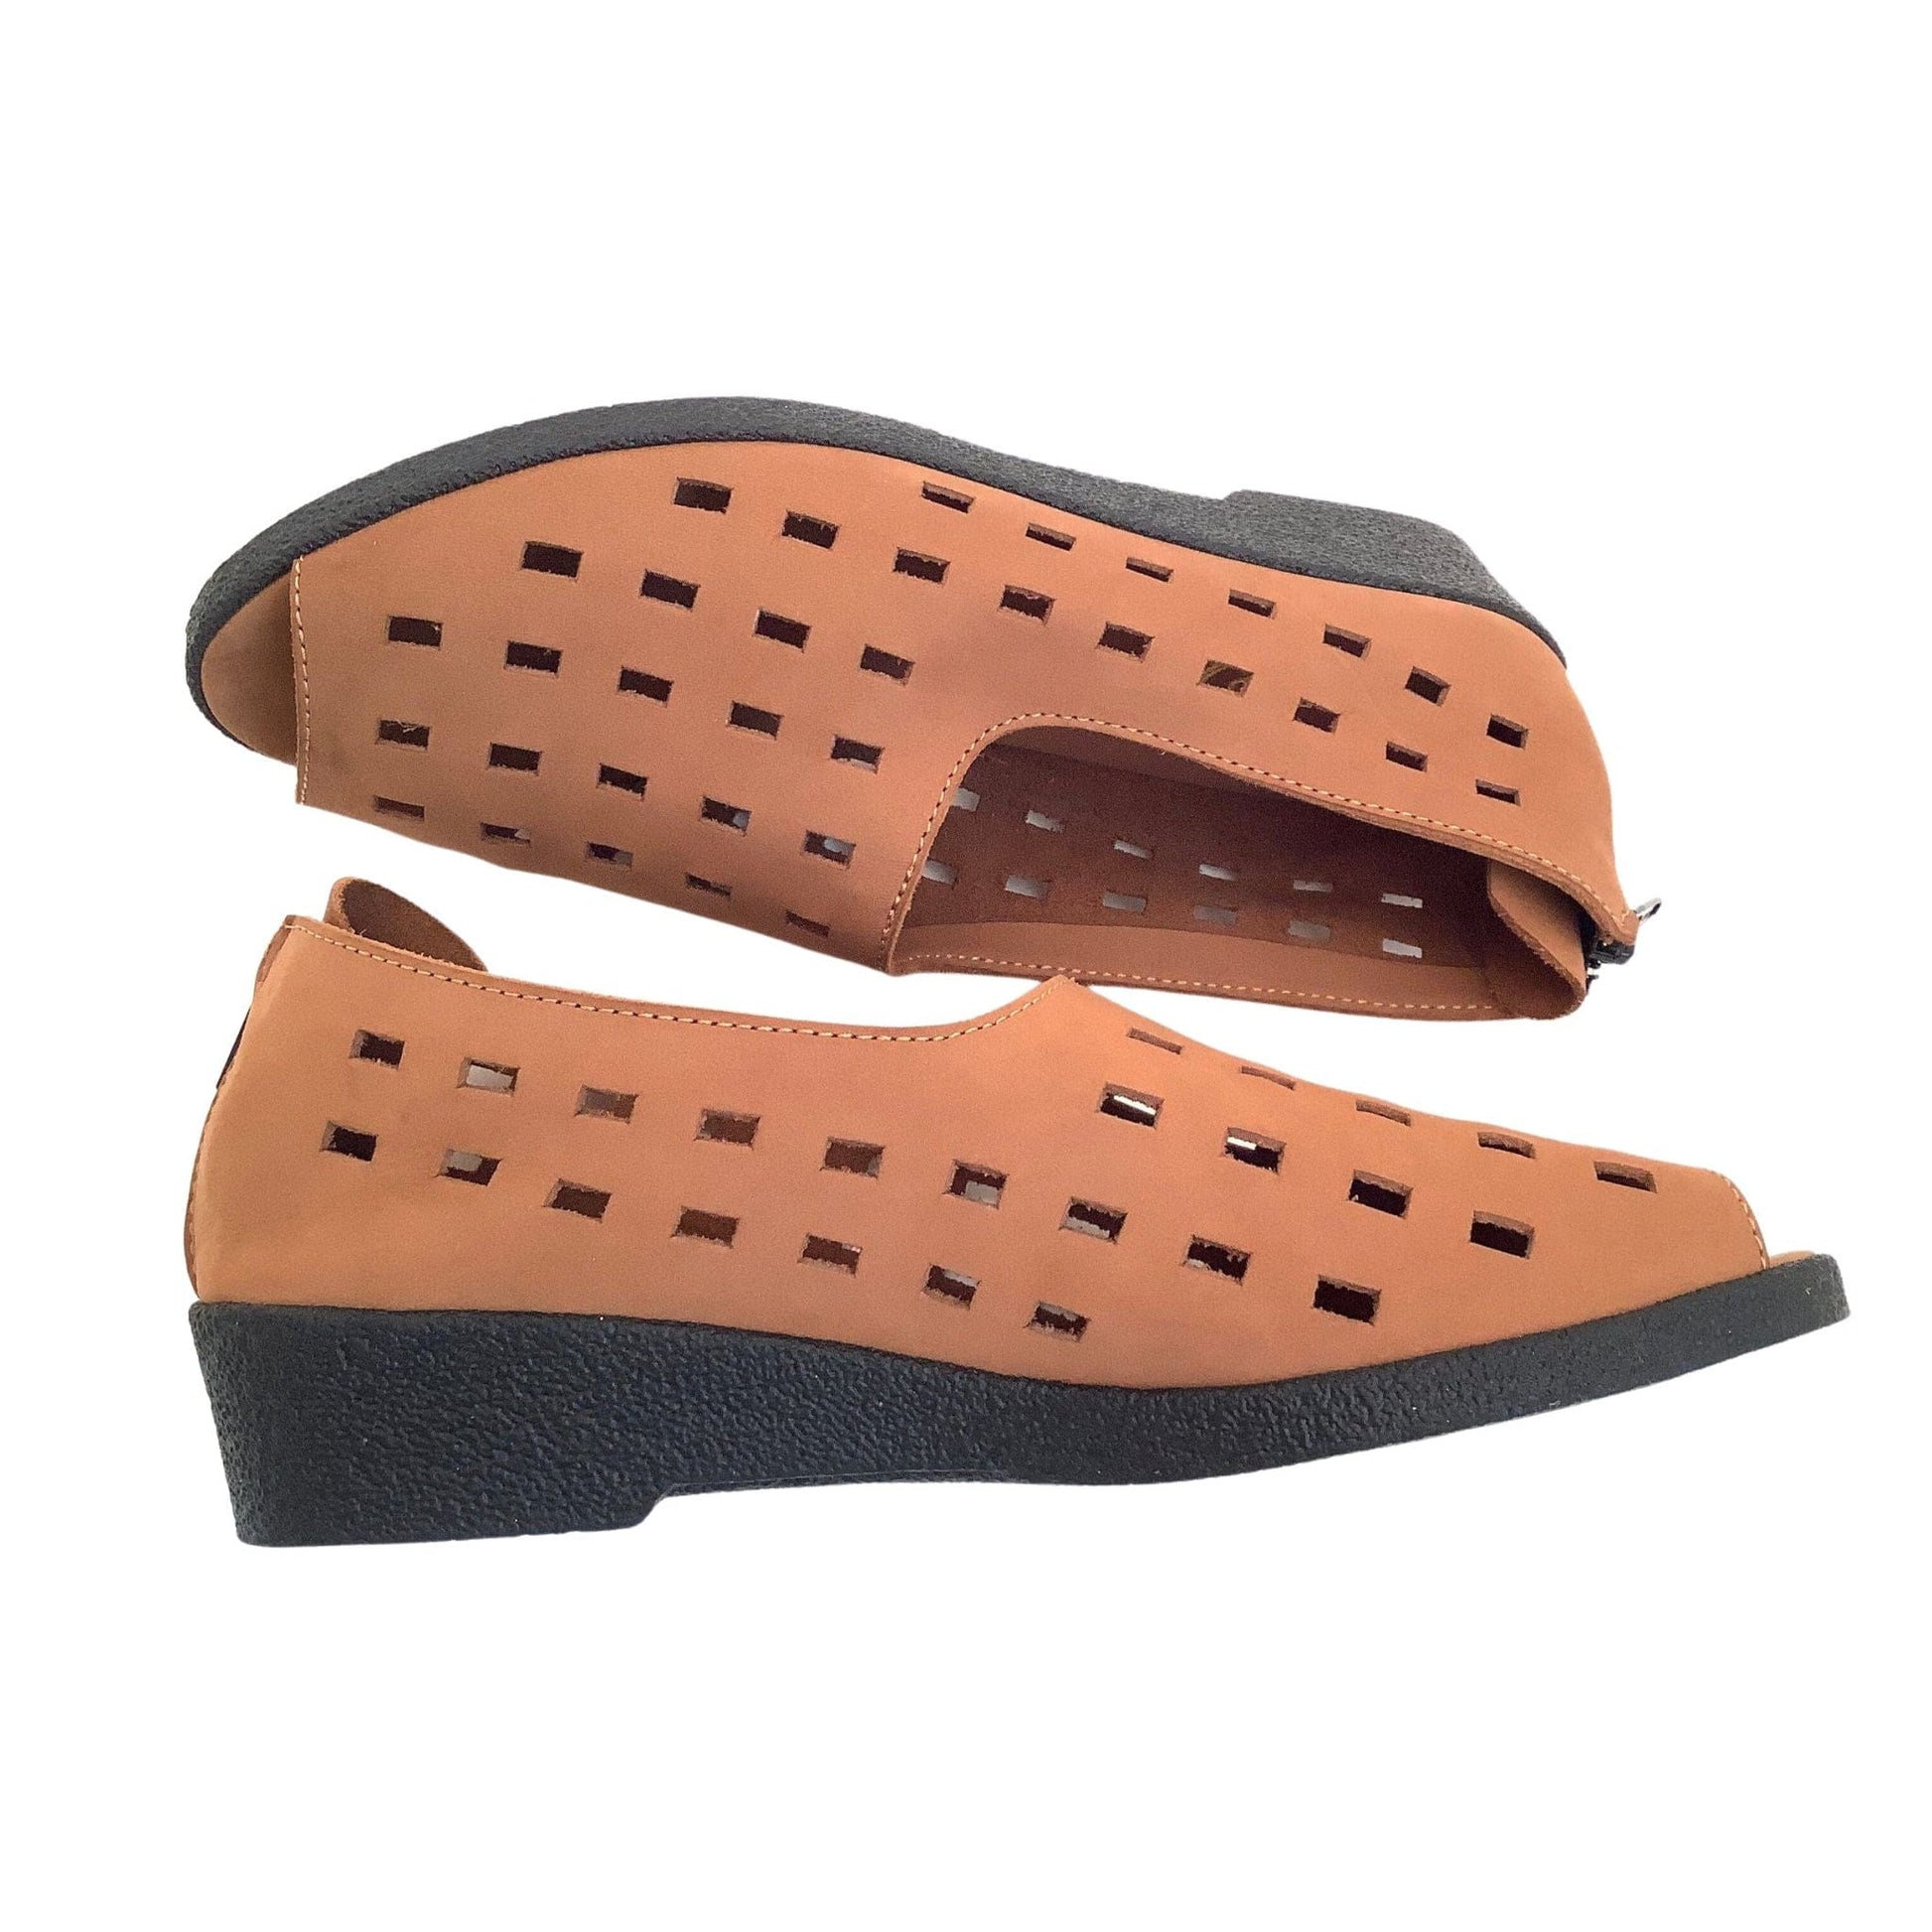 Perforated Flat Heel Shoes 7.5 / Brown / Y2K - Now